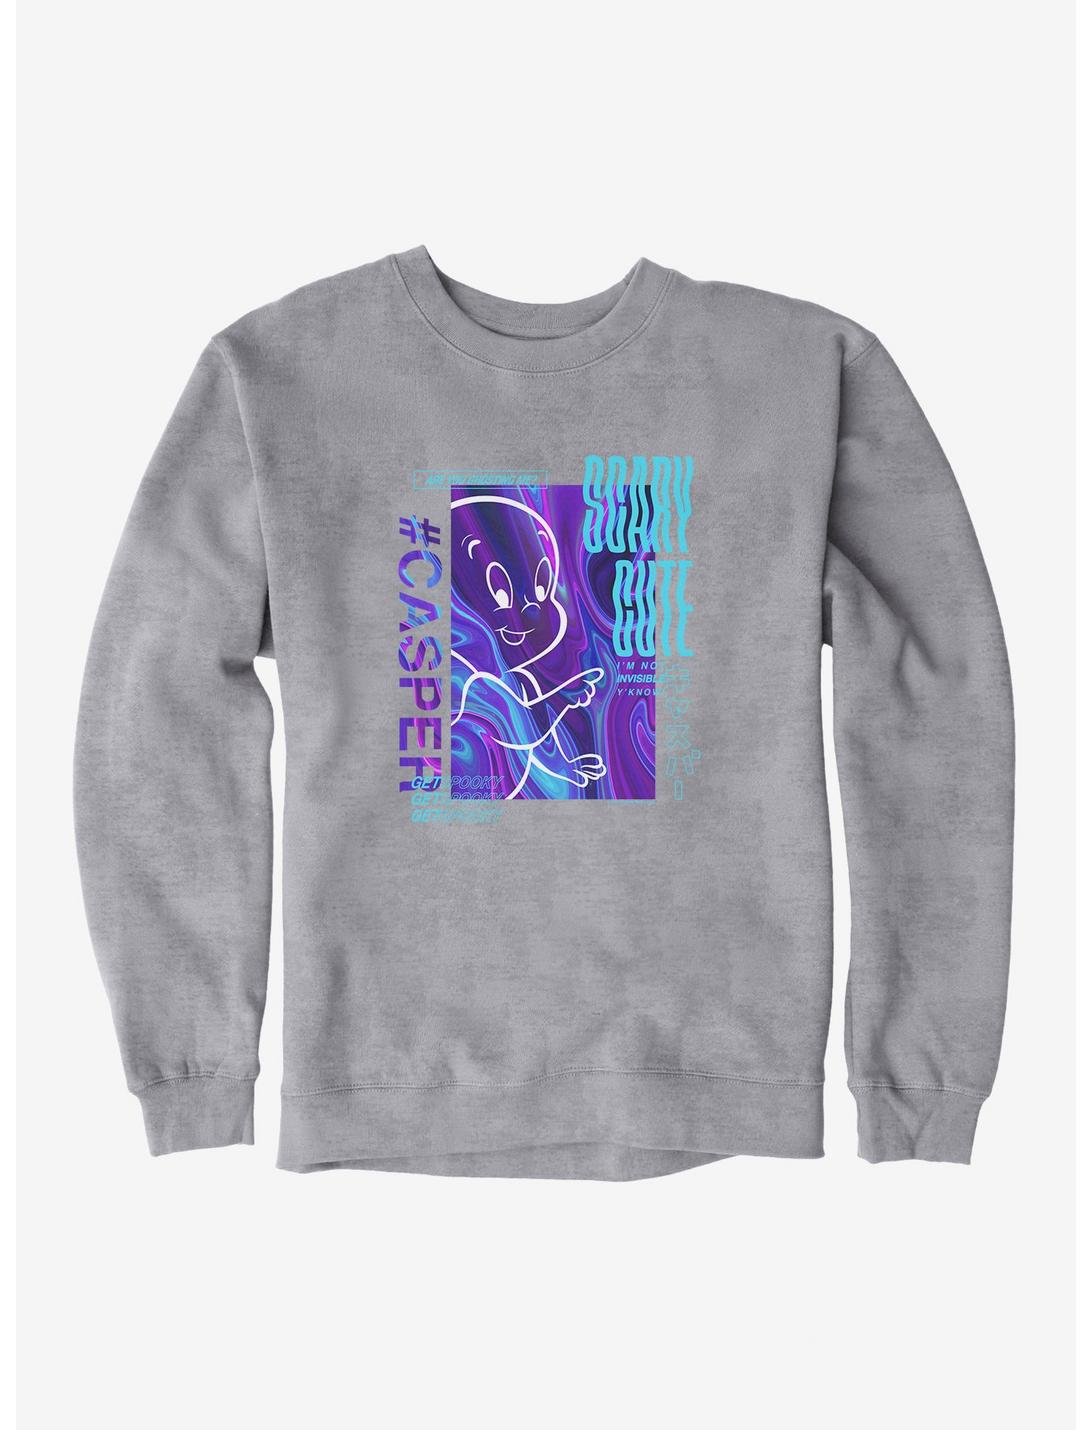 Casper The Friendly Ghost Virtual Raver Scary Cute Sweatshirt, HEATHER GREY, hi-res